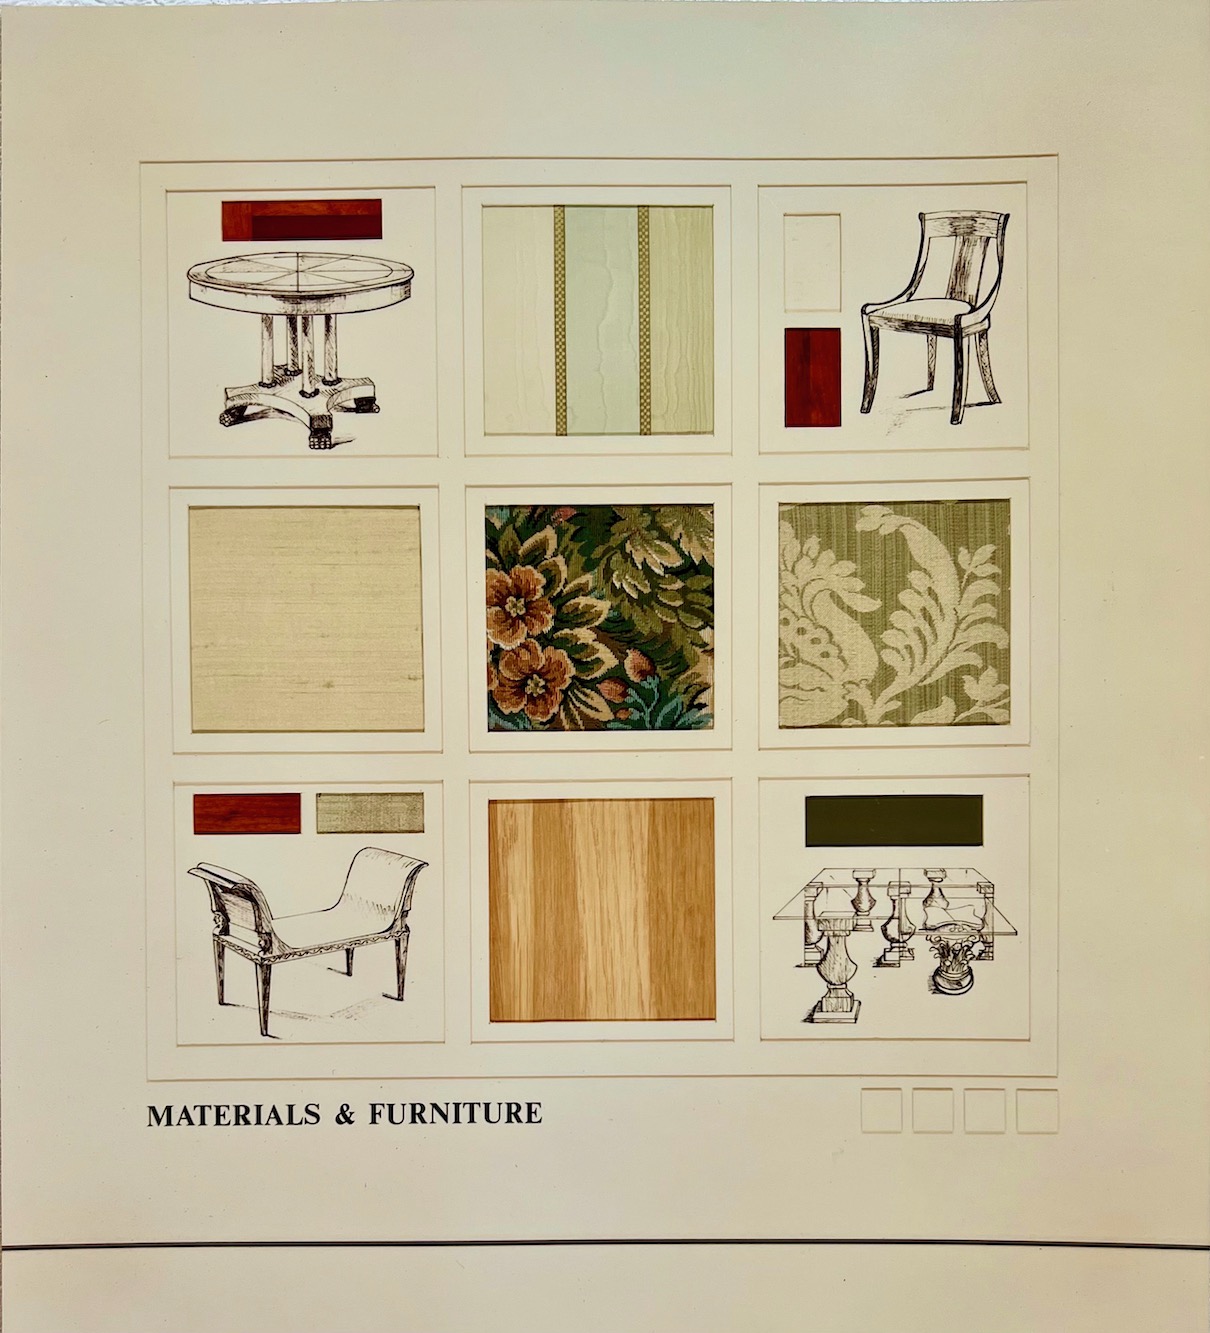 NYSID Porfolio 1990 - Winning Project - Materials & Furniture Board